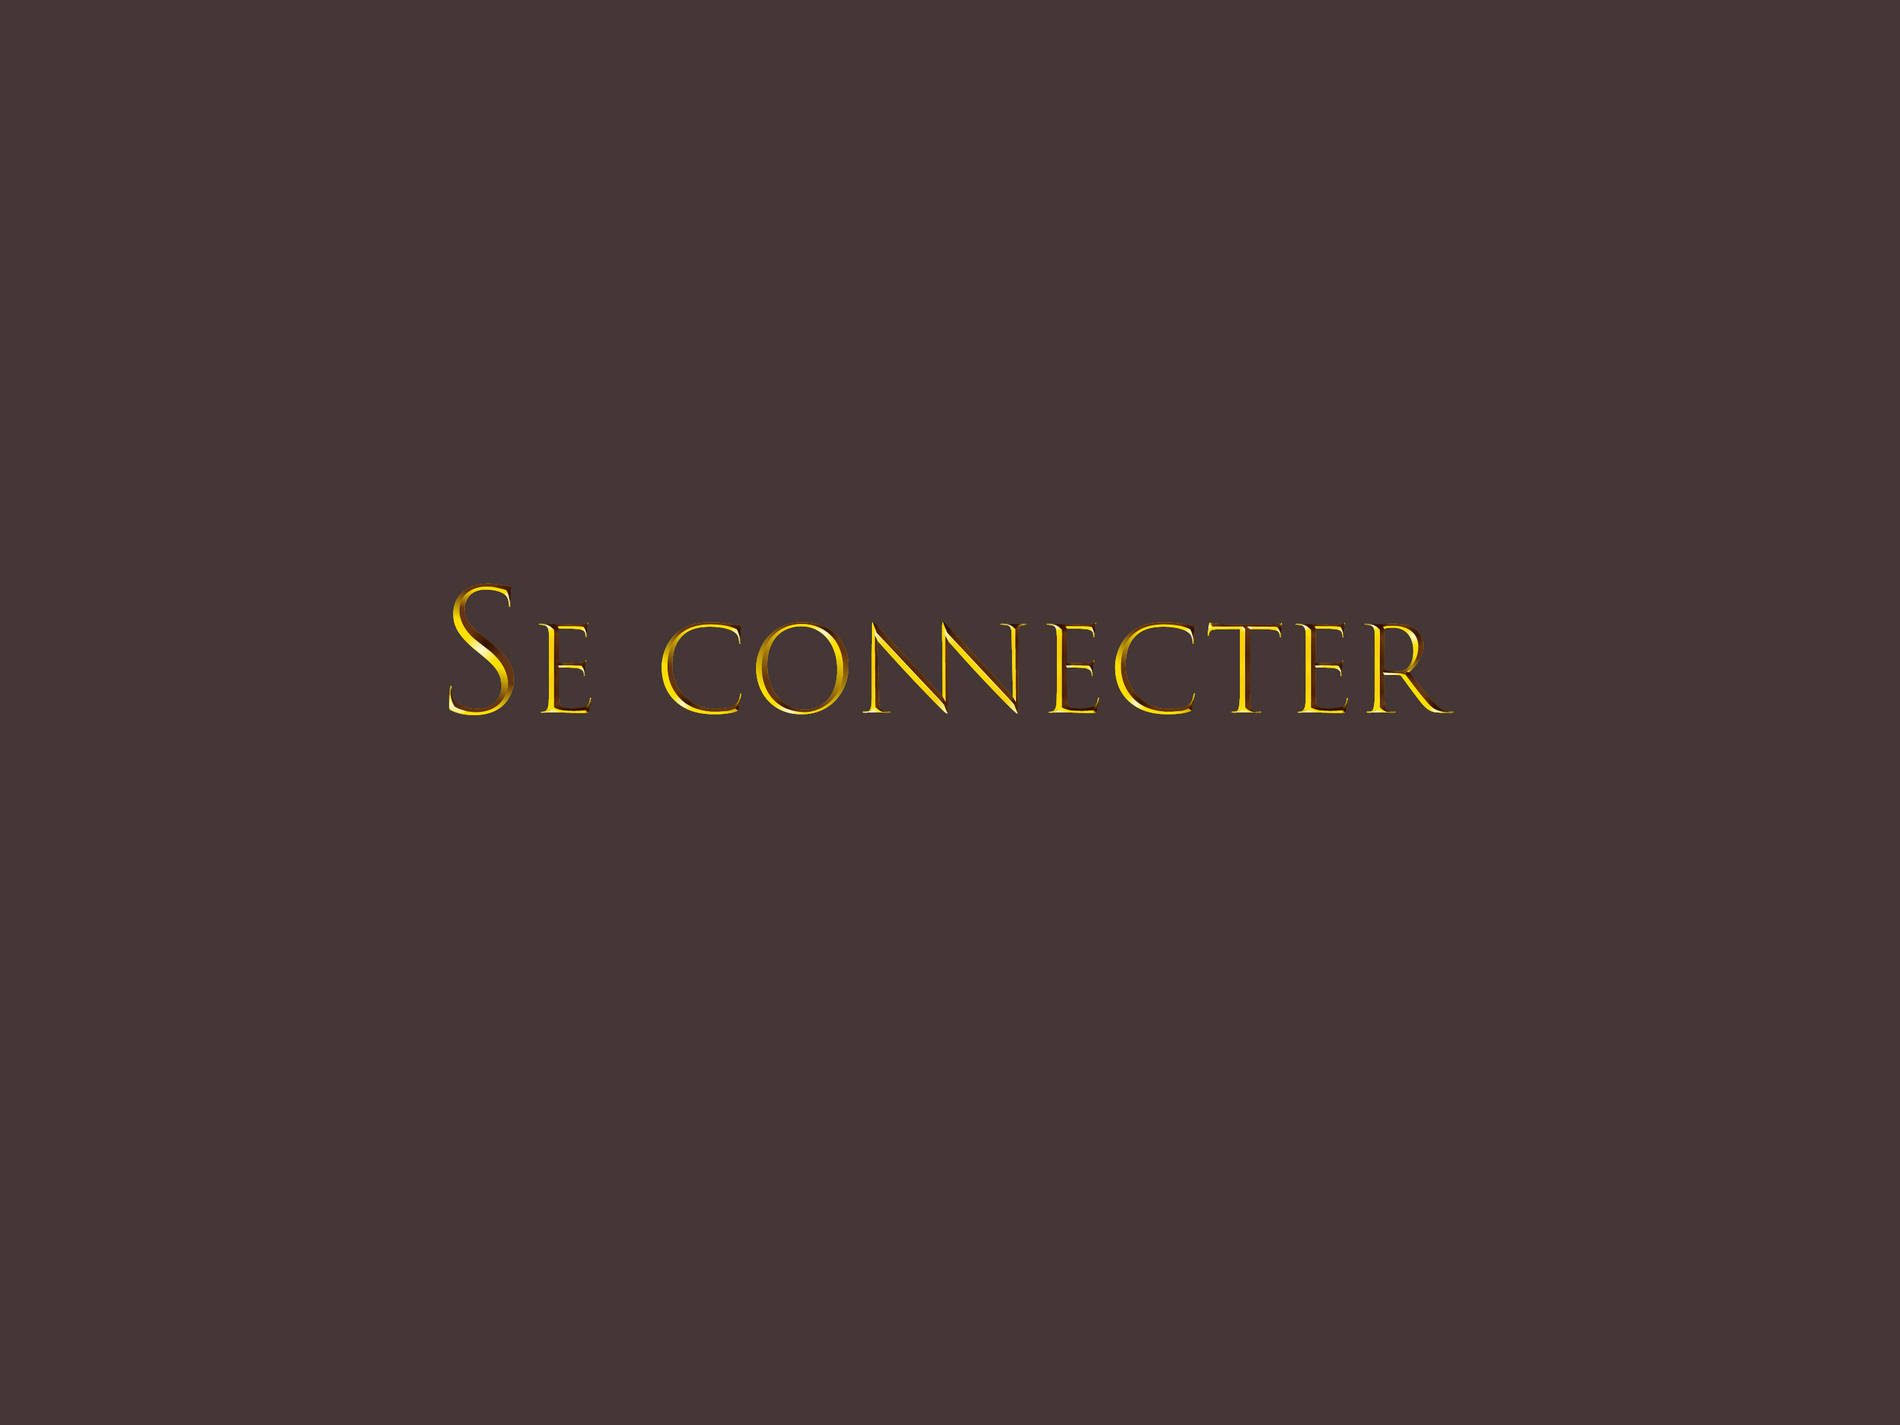 <span style="font-size:18px;">Se connecter